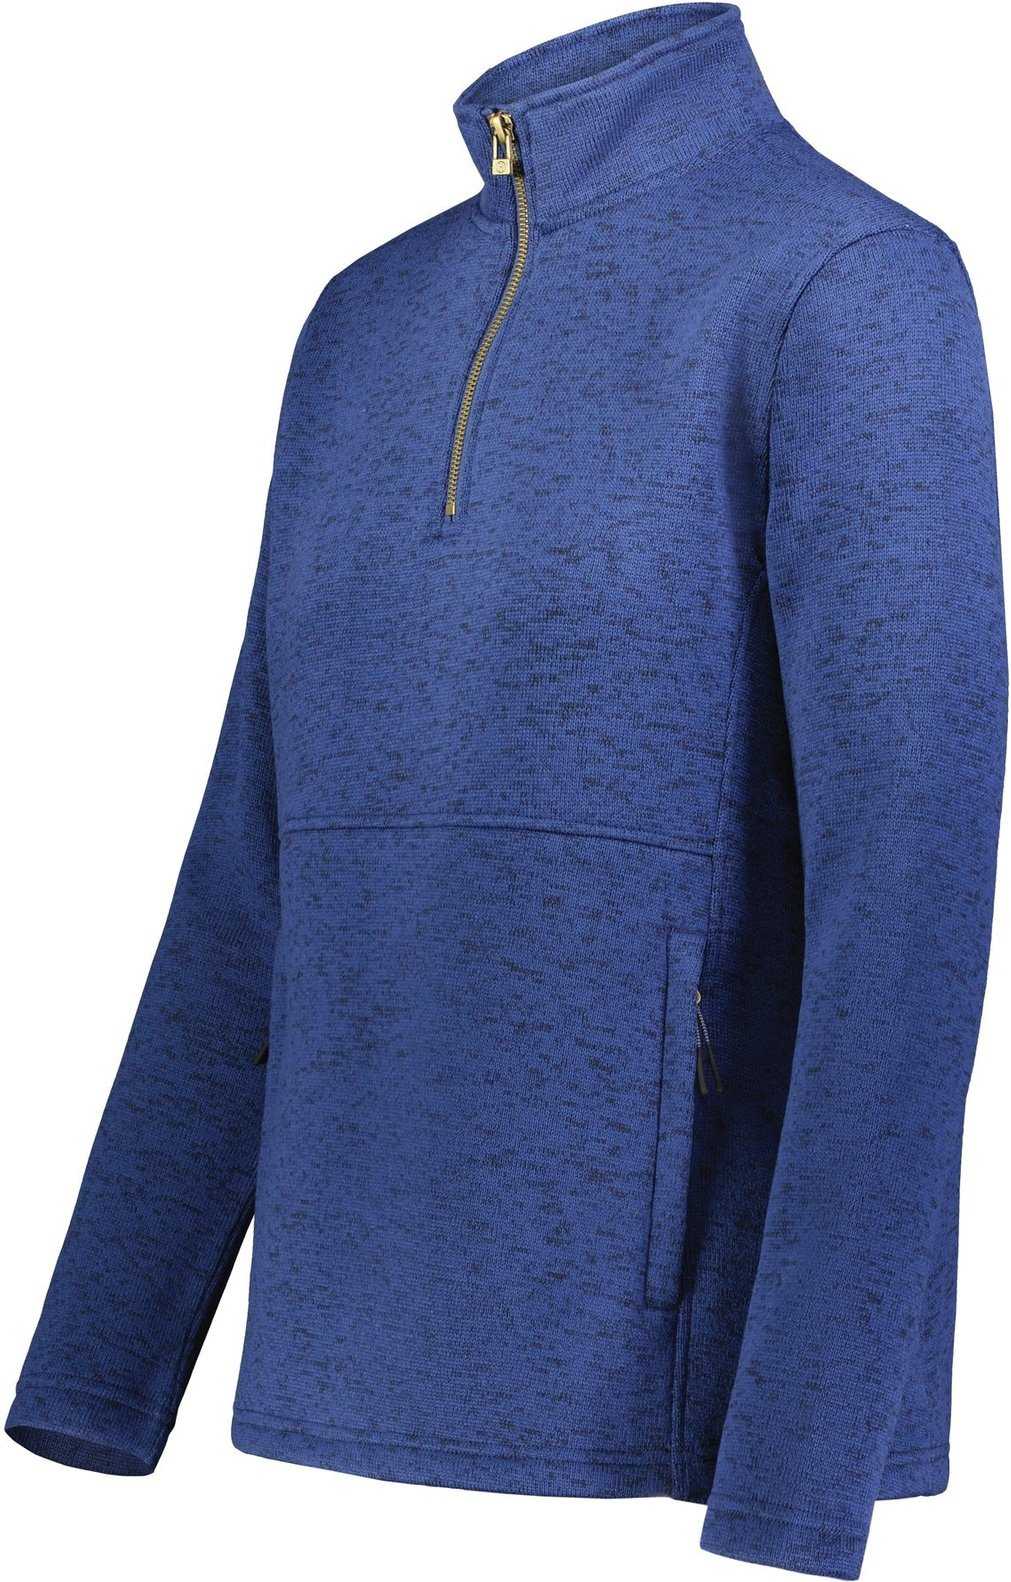 Holloway 223740 Ladies Alpine Sweater Fleece 1/4 Zip Pullover - Navy Heather - HIT a Double